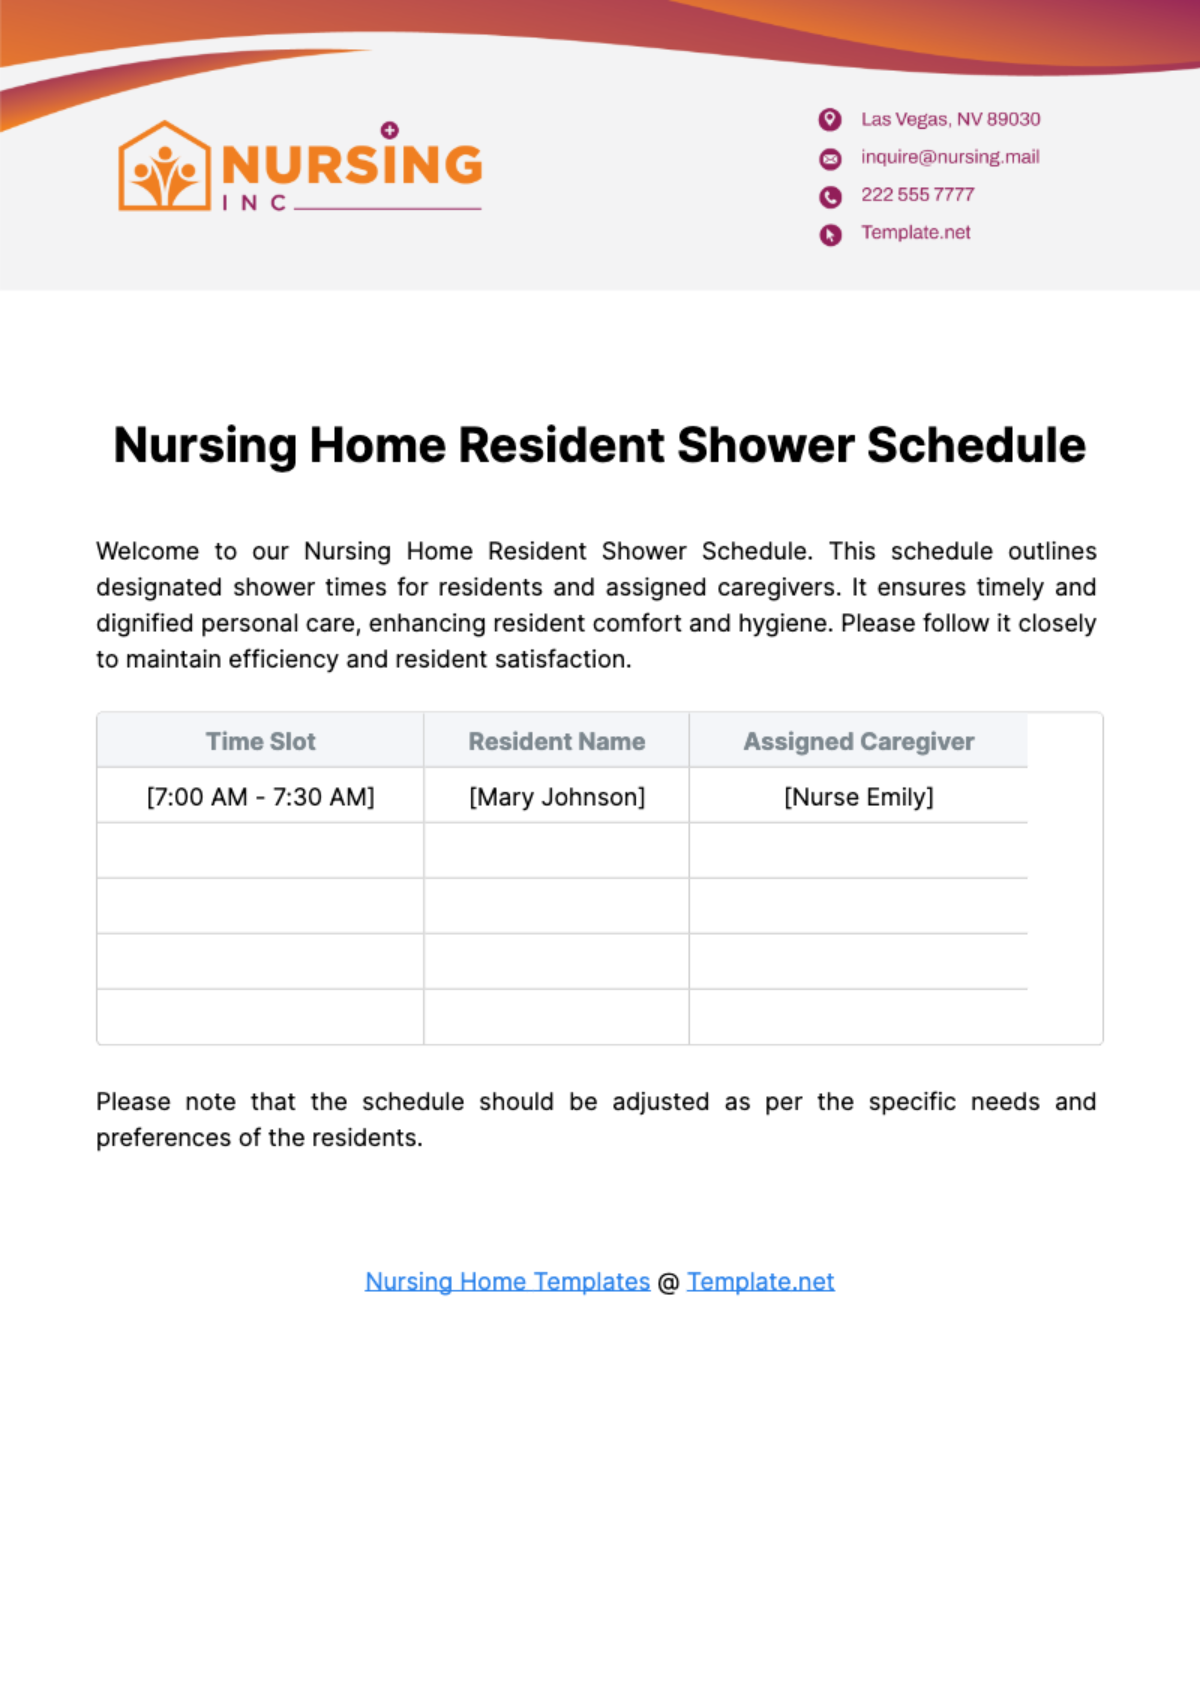 Nursing Home Resident Shower Schedule Template